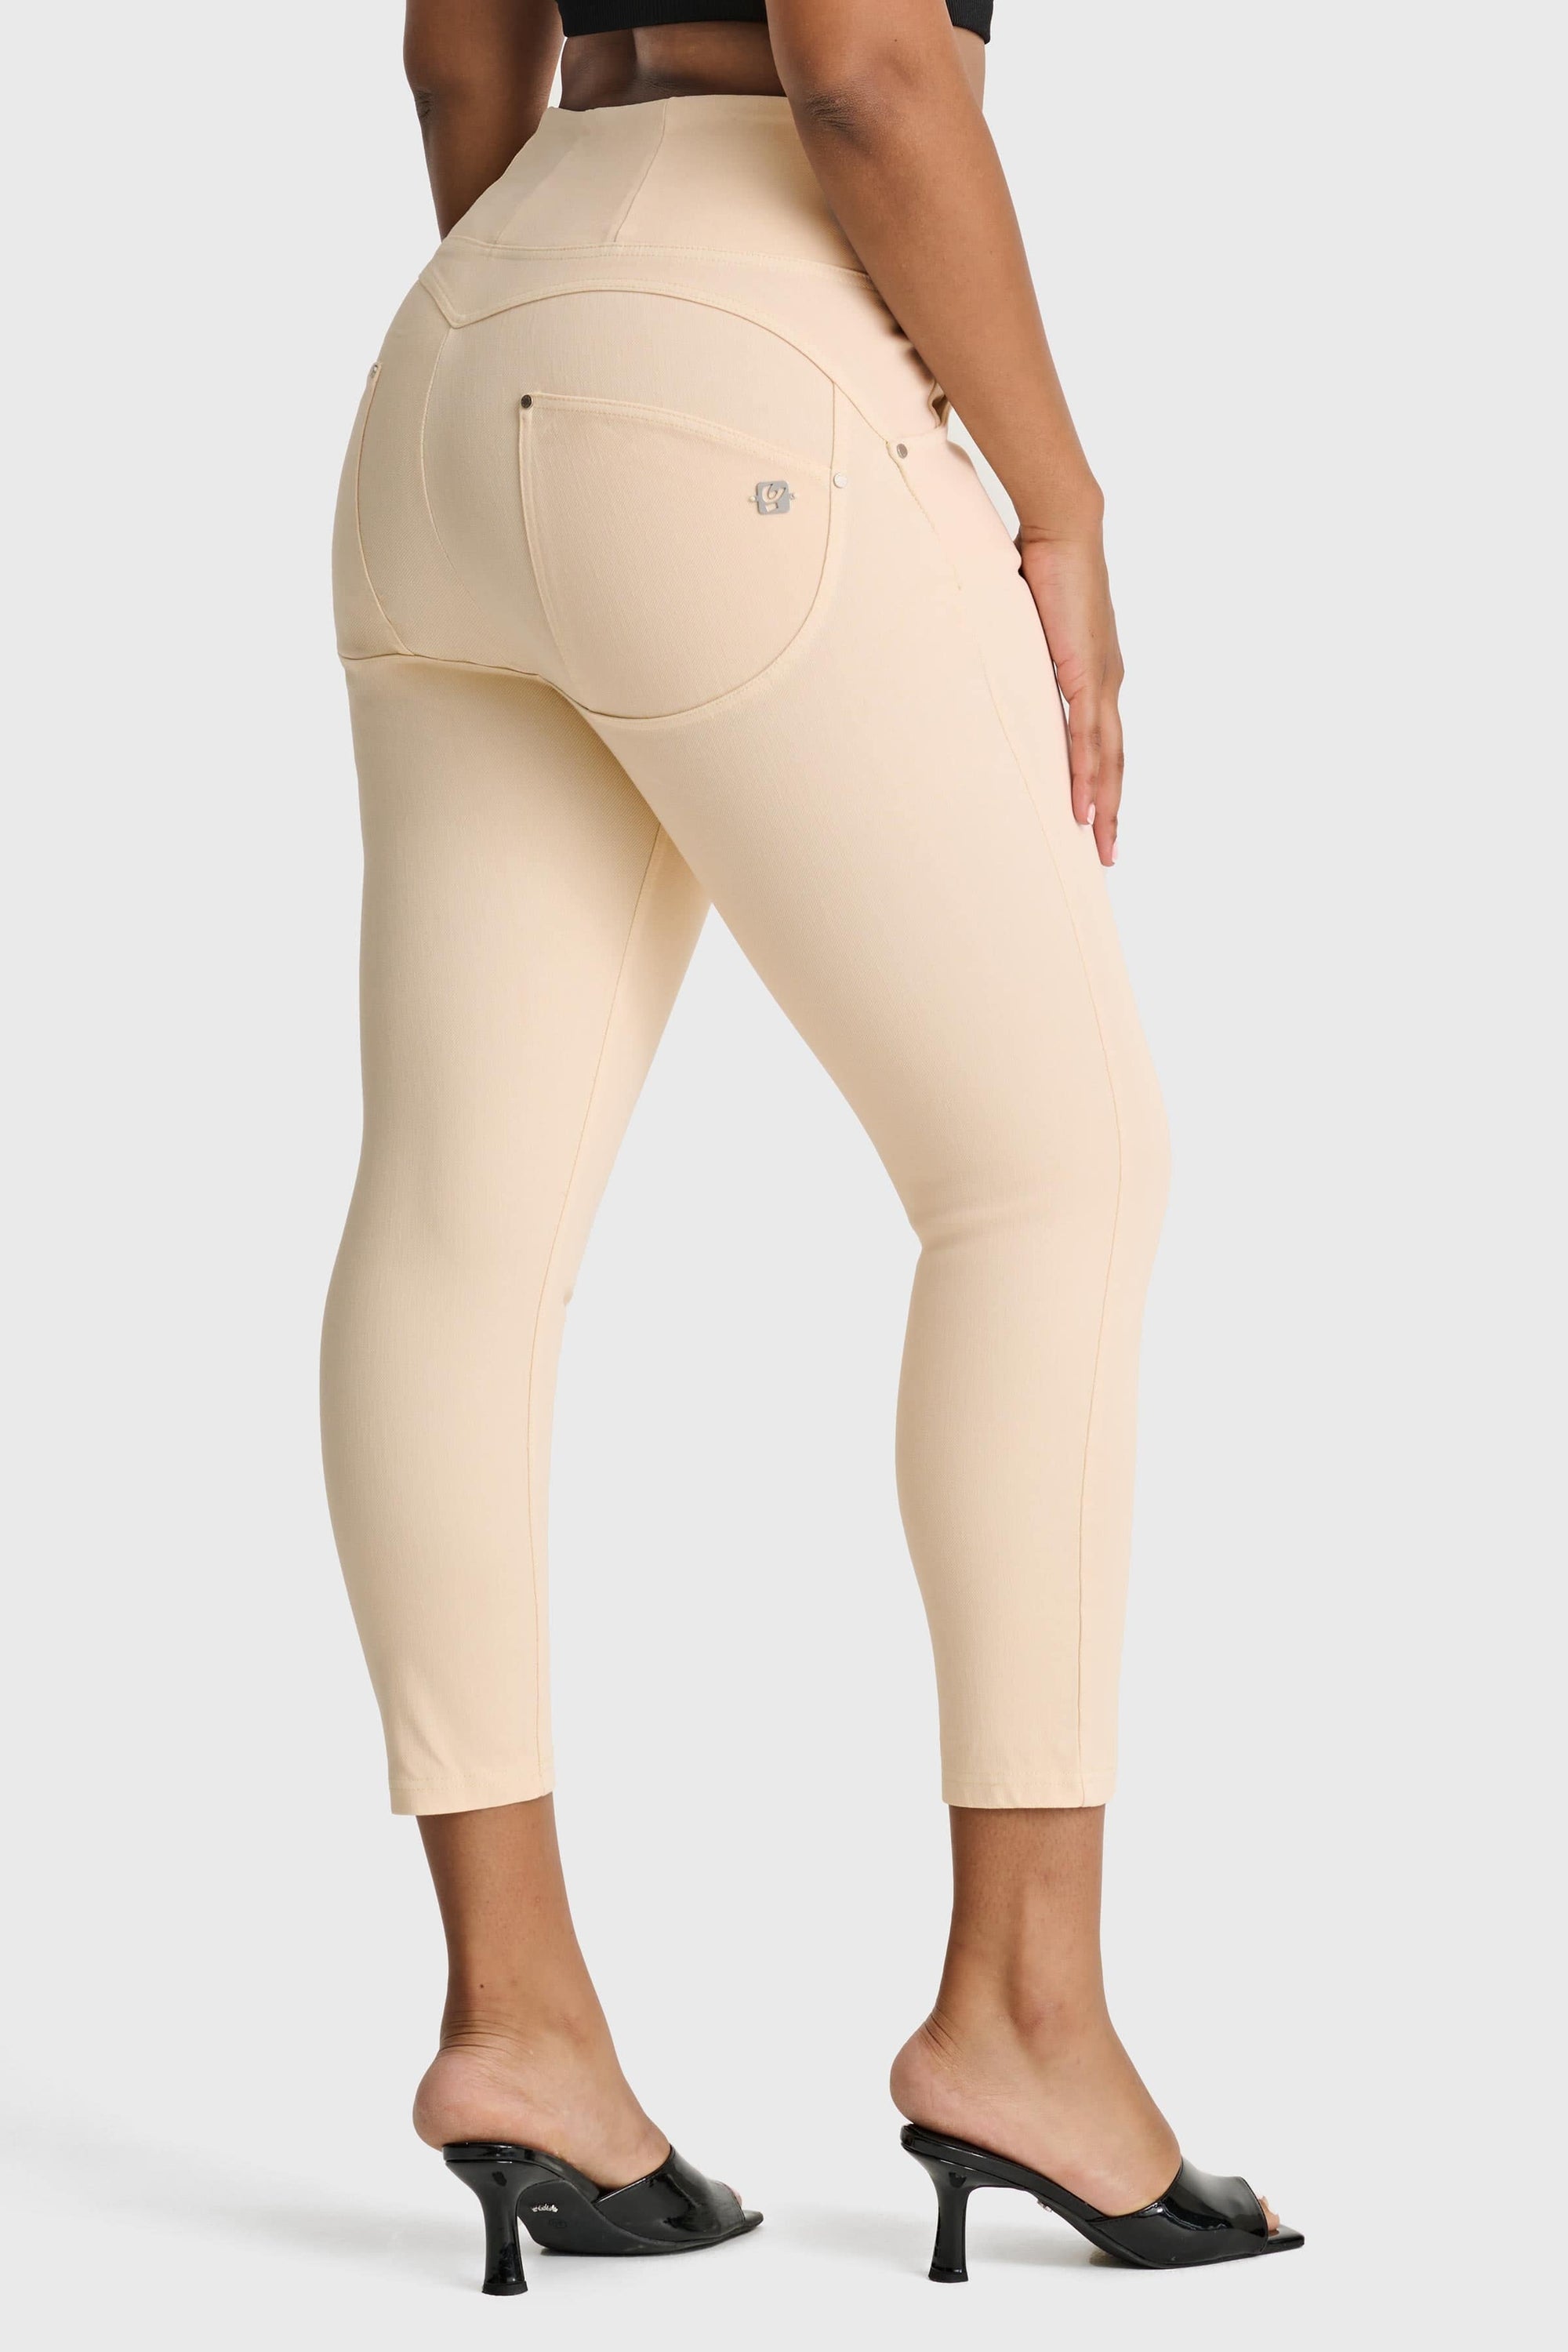 WR.UP® Snug Curvy Jeans - High Waisted - 7/8 Length - Ivory 1